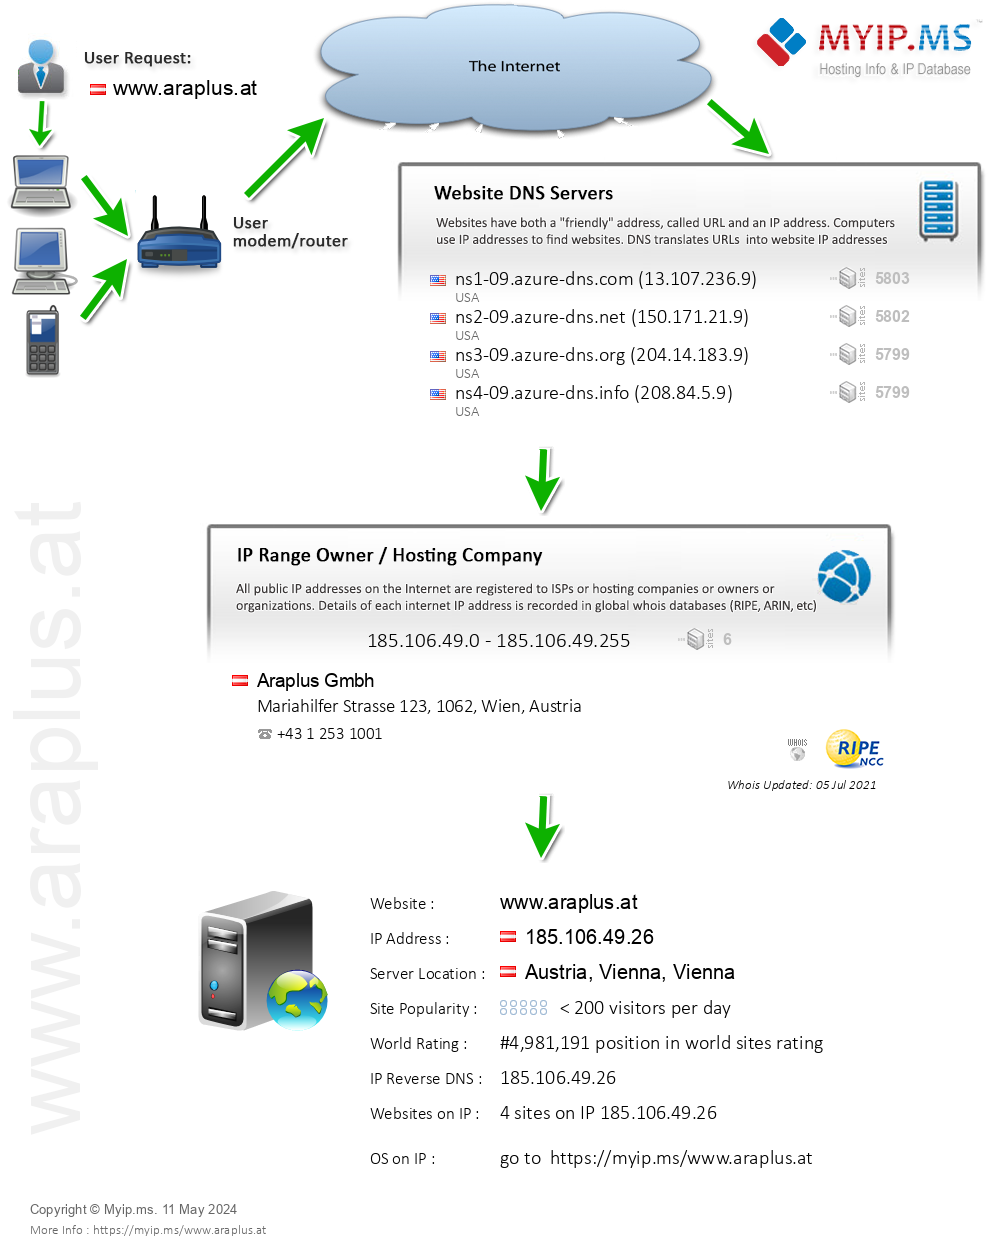 Araplus.at - Website Hosting Visual IP Diagram